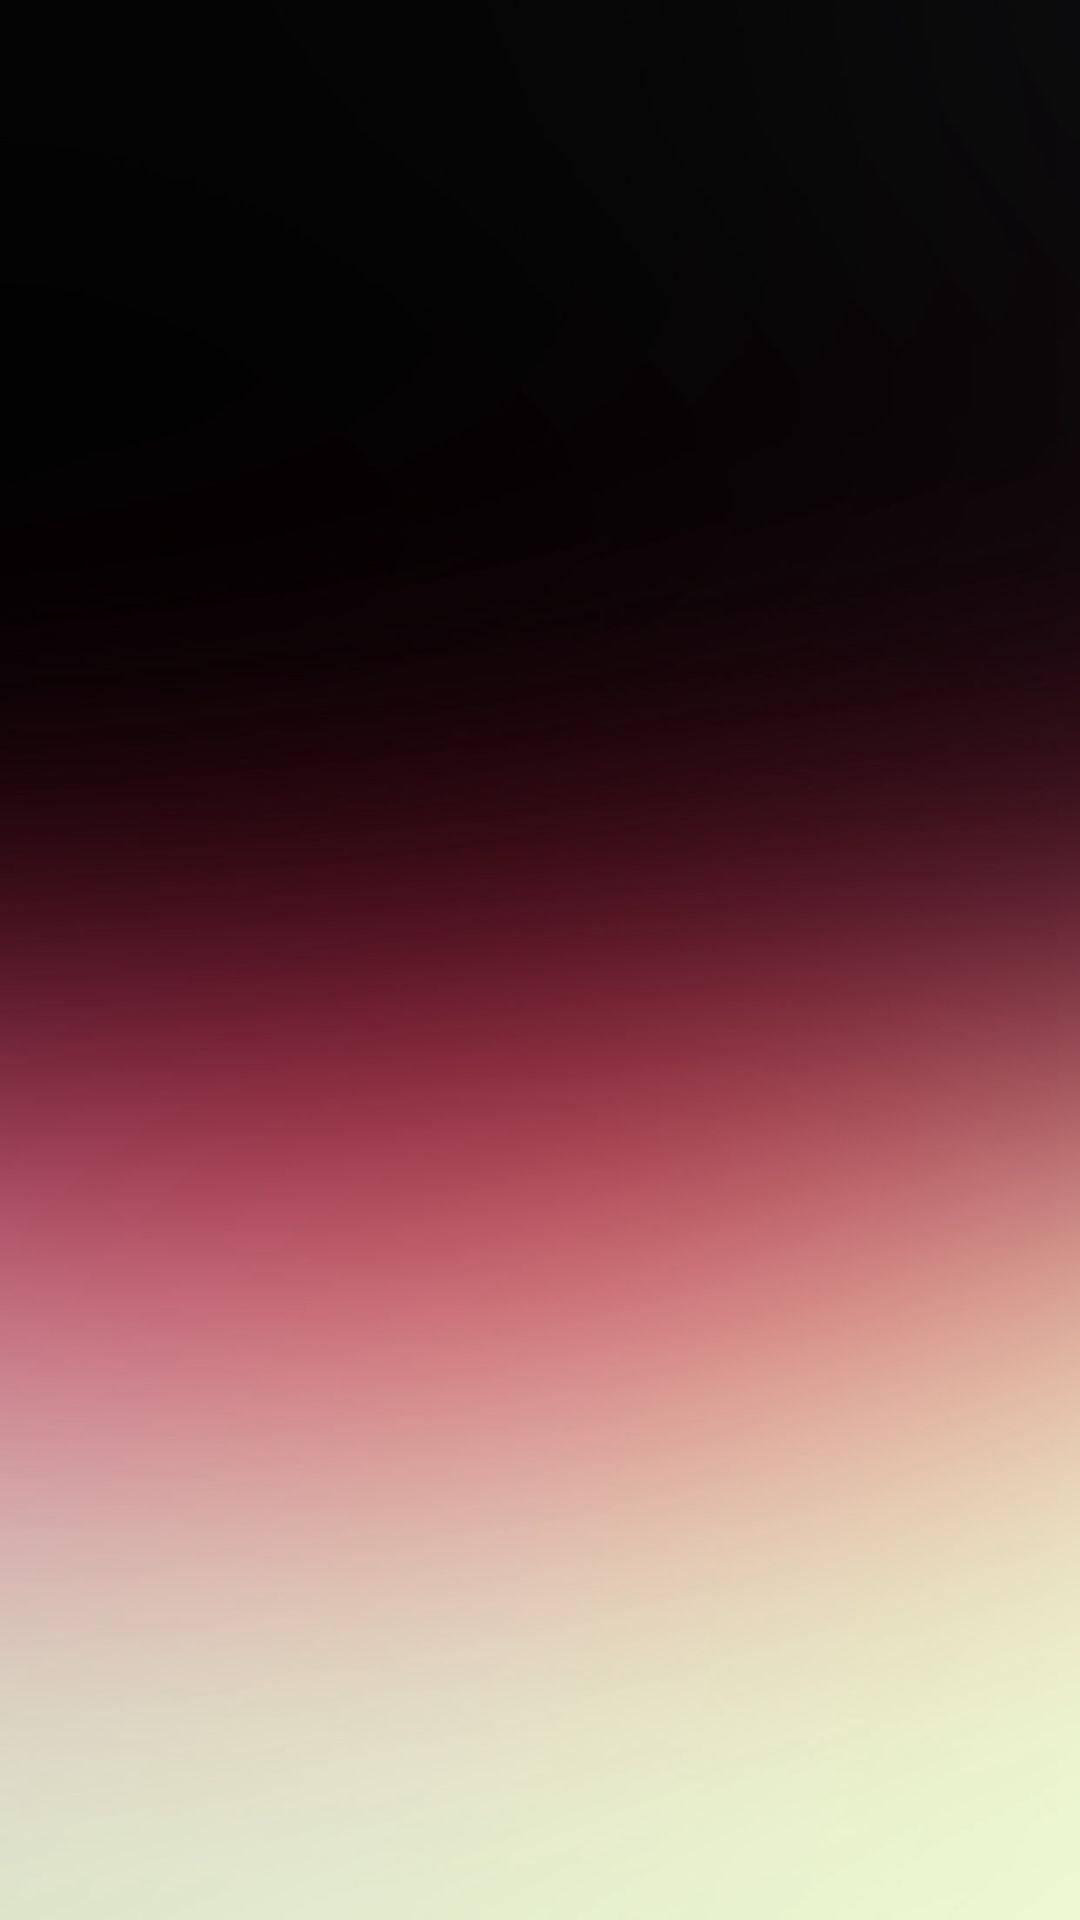 Dark Red Bokeh Gradation Blur Pink iPhone 8 Wallpaper